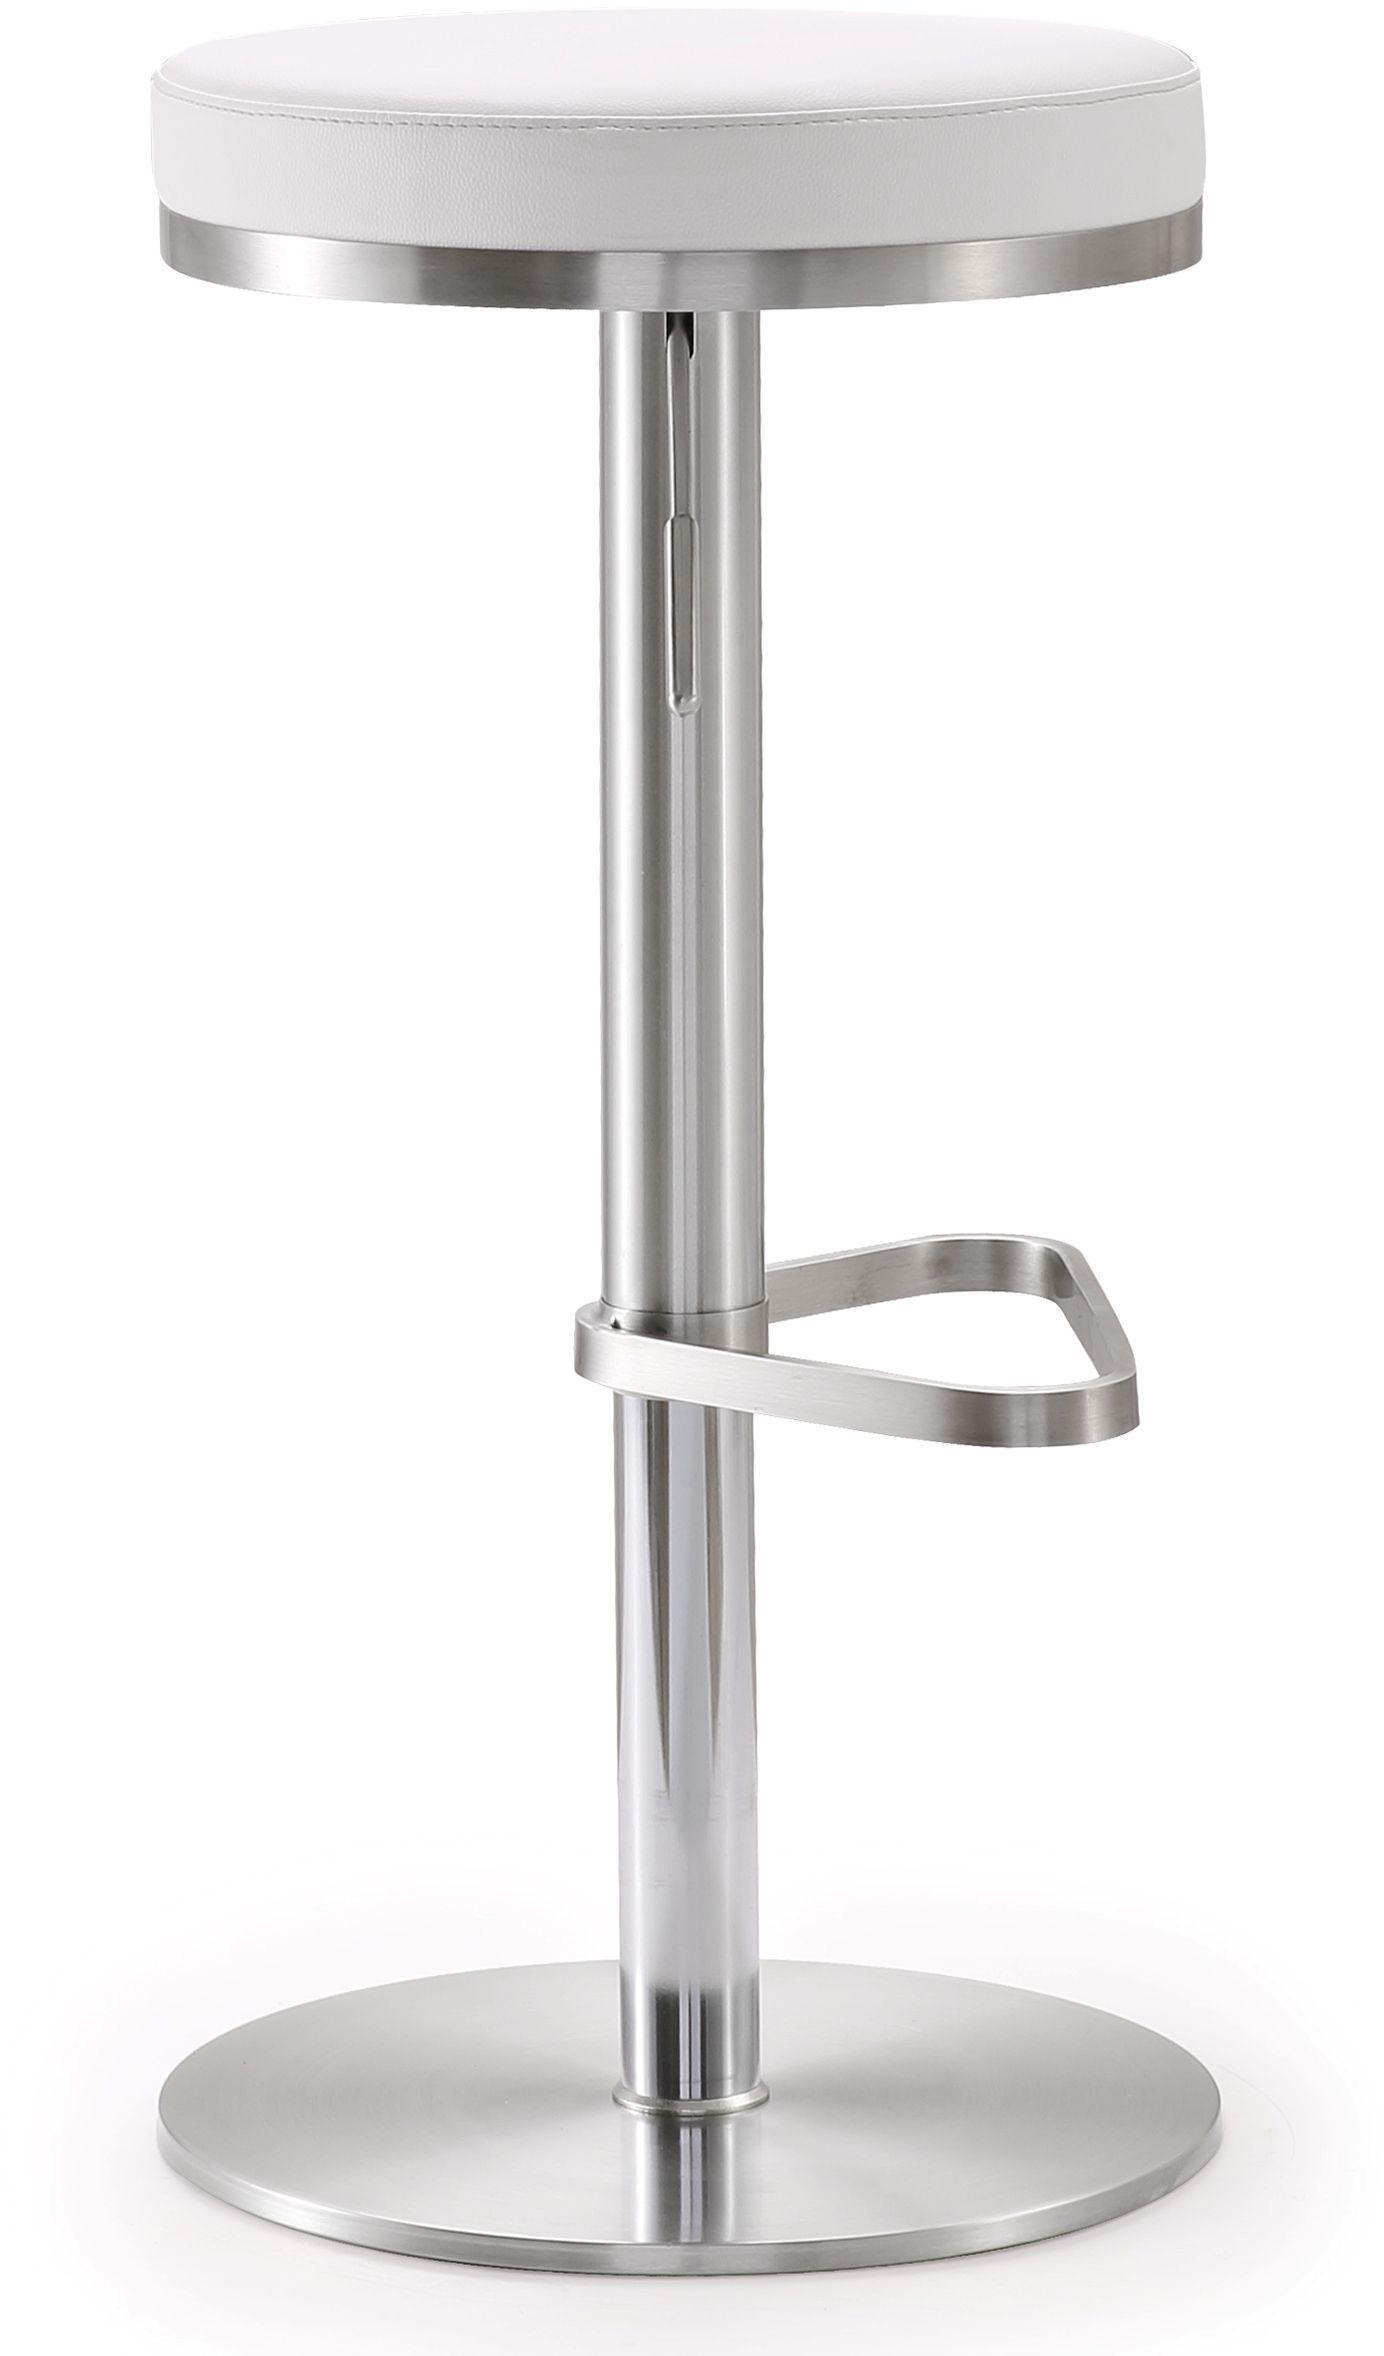 Fano White Stainless Steel Adjustable Barstool - Image 2